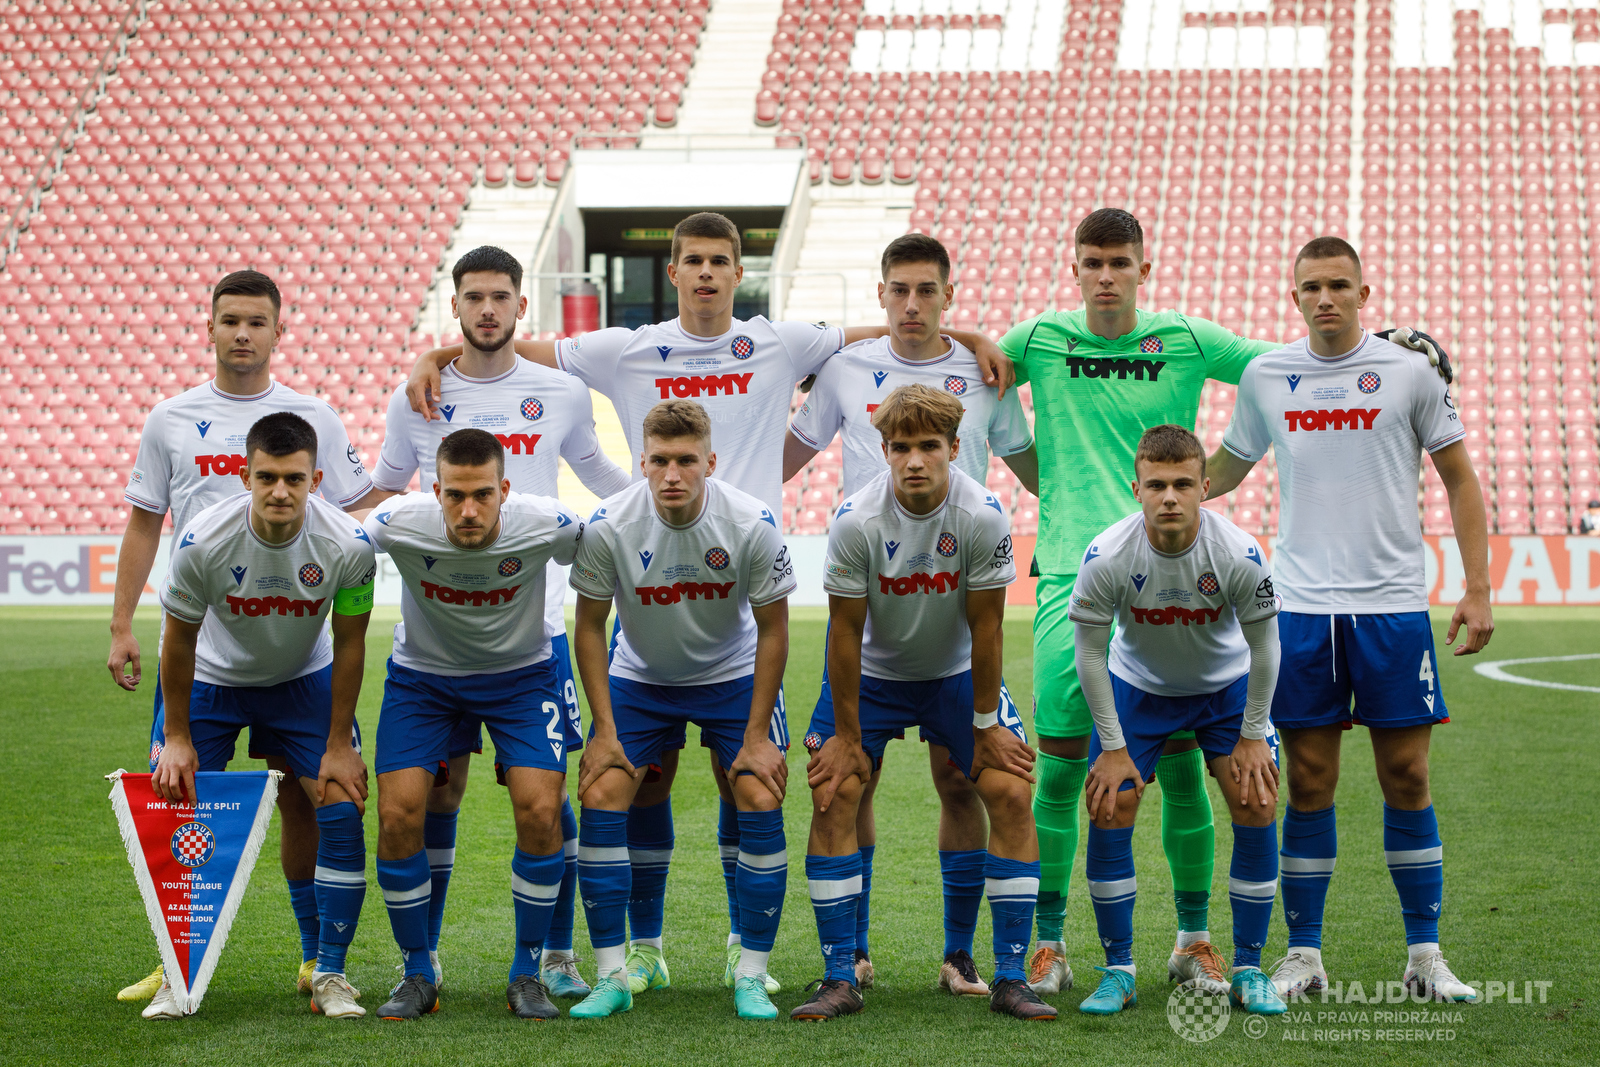 Hajduk Split v AC Milan, UEFA Youth League 2022/23: official line-ups